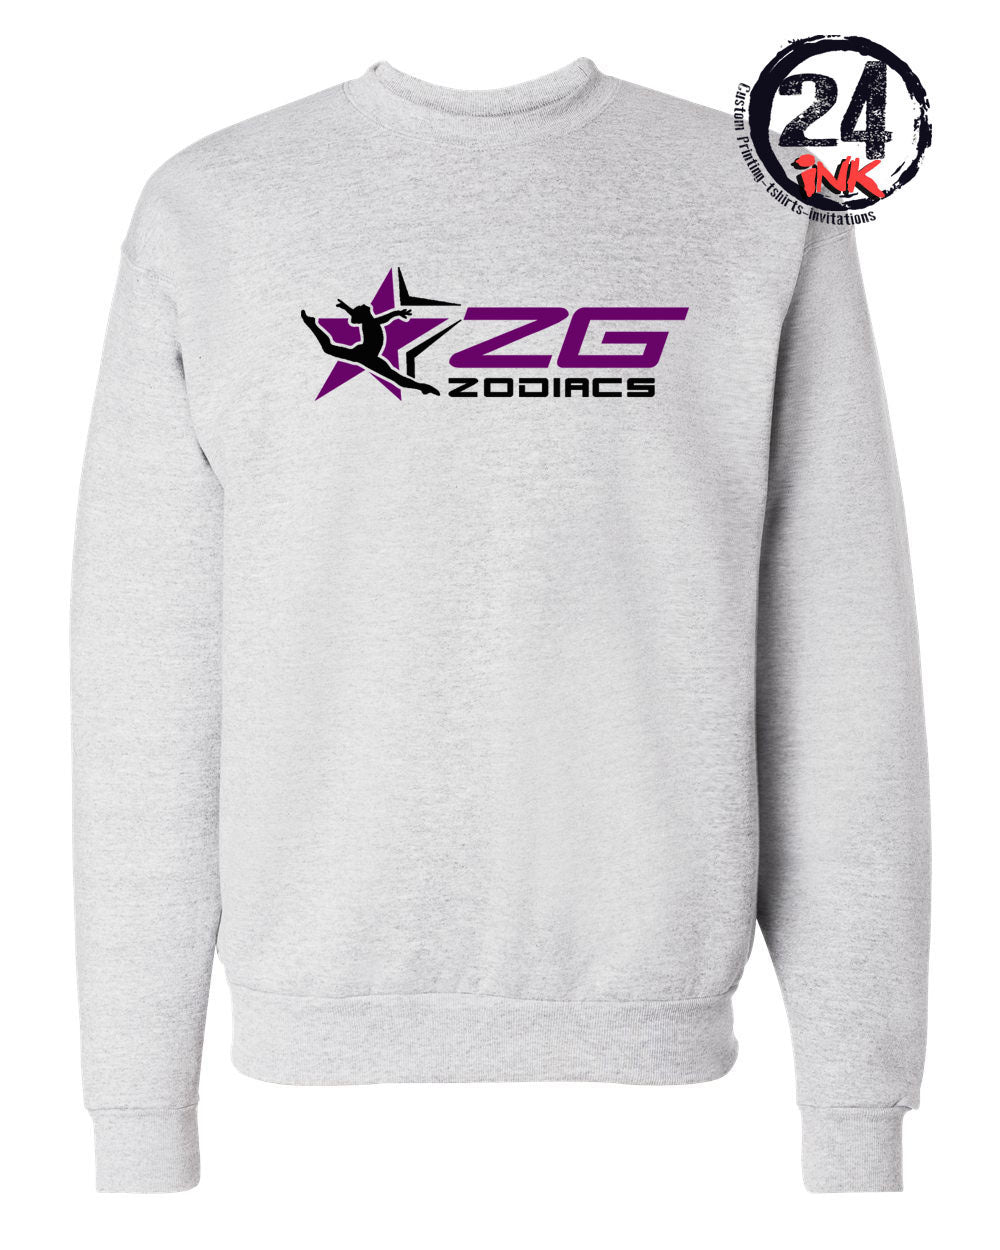 Zodiac logo non hooded sweatshirt